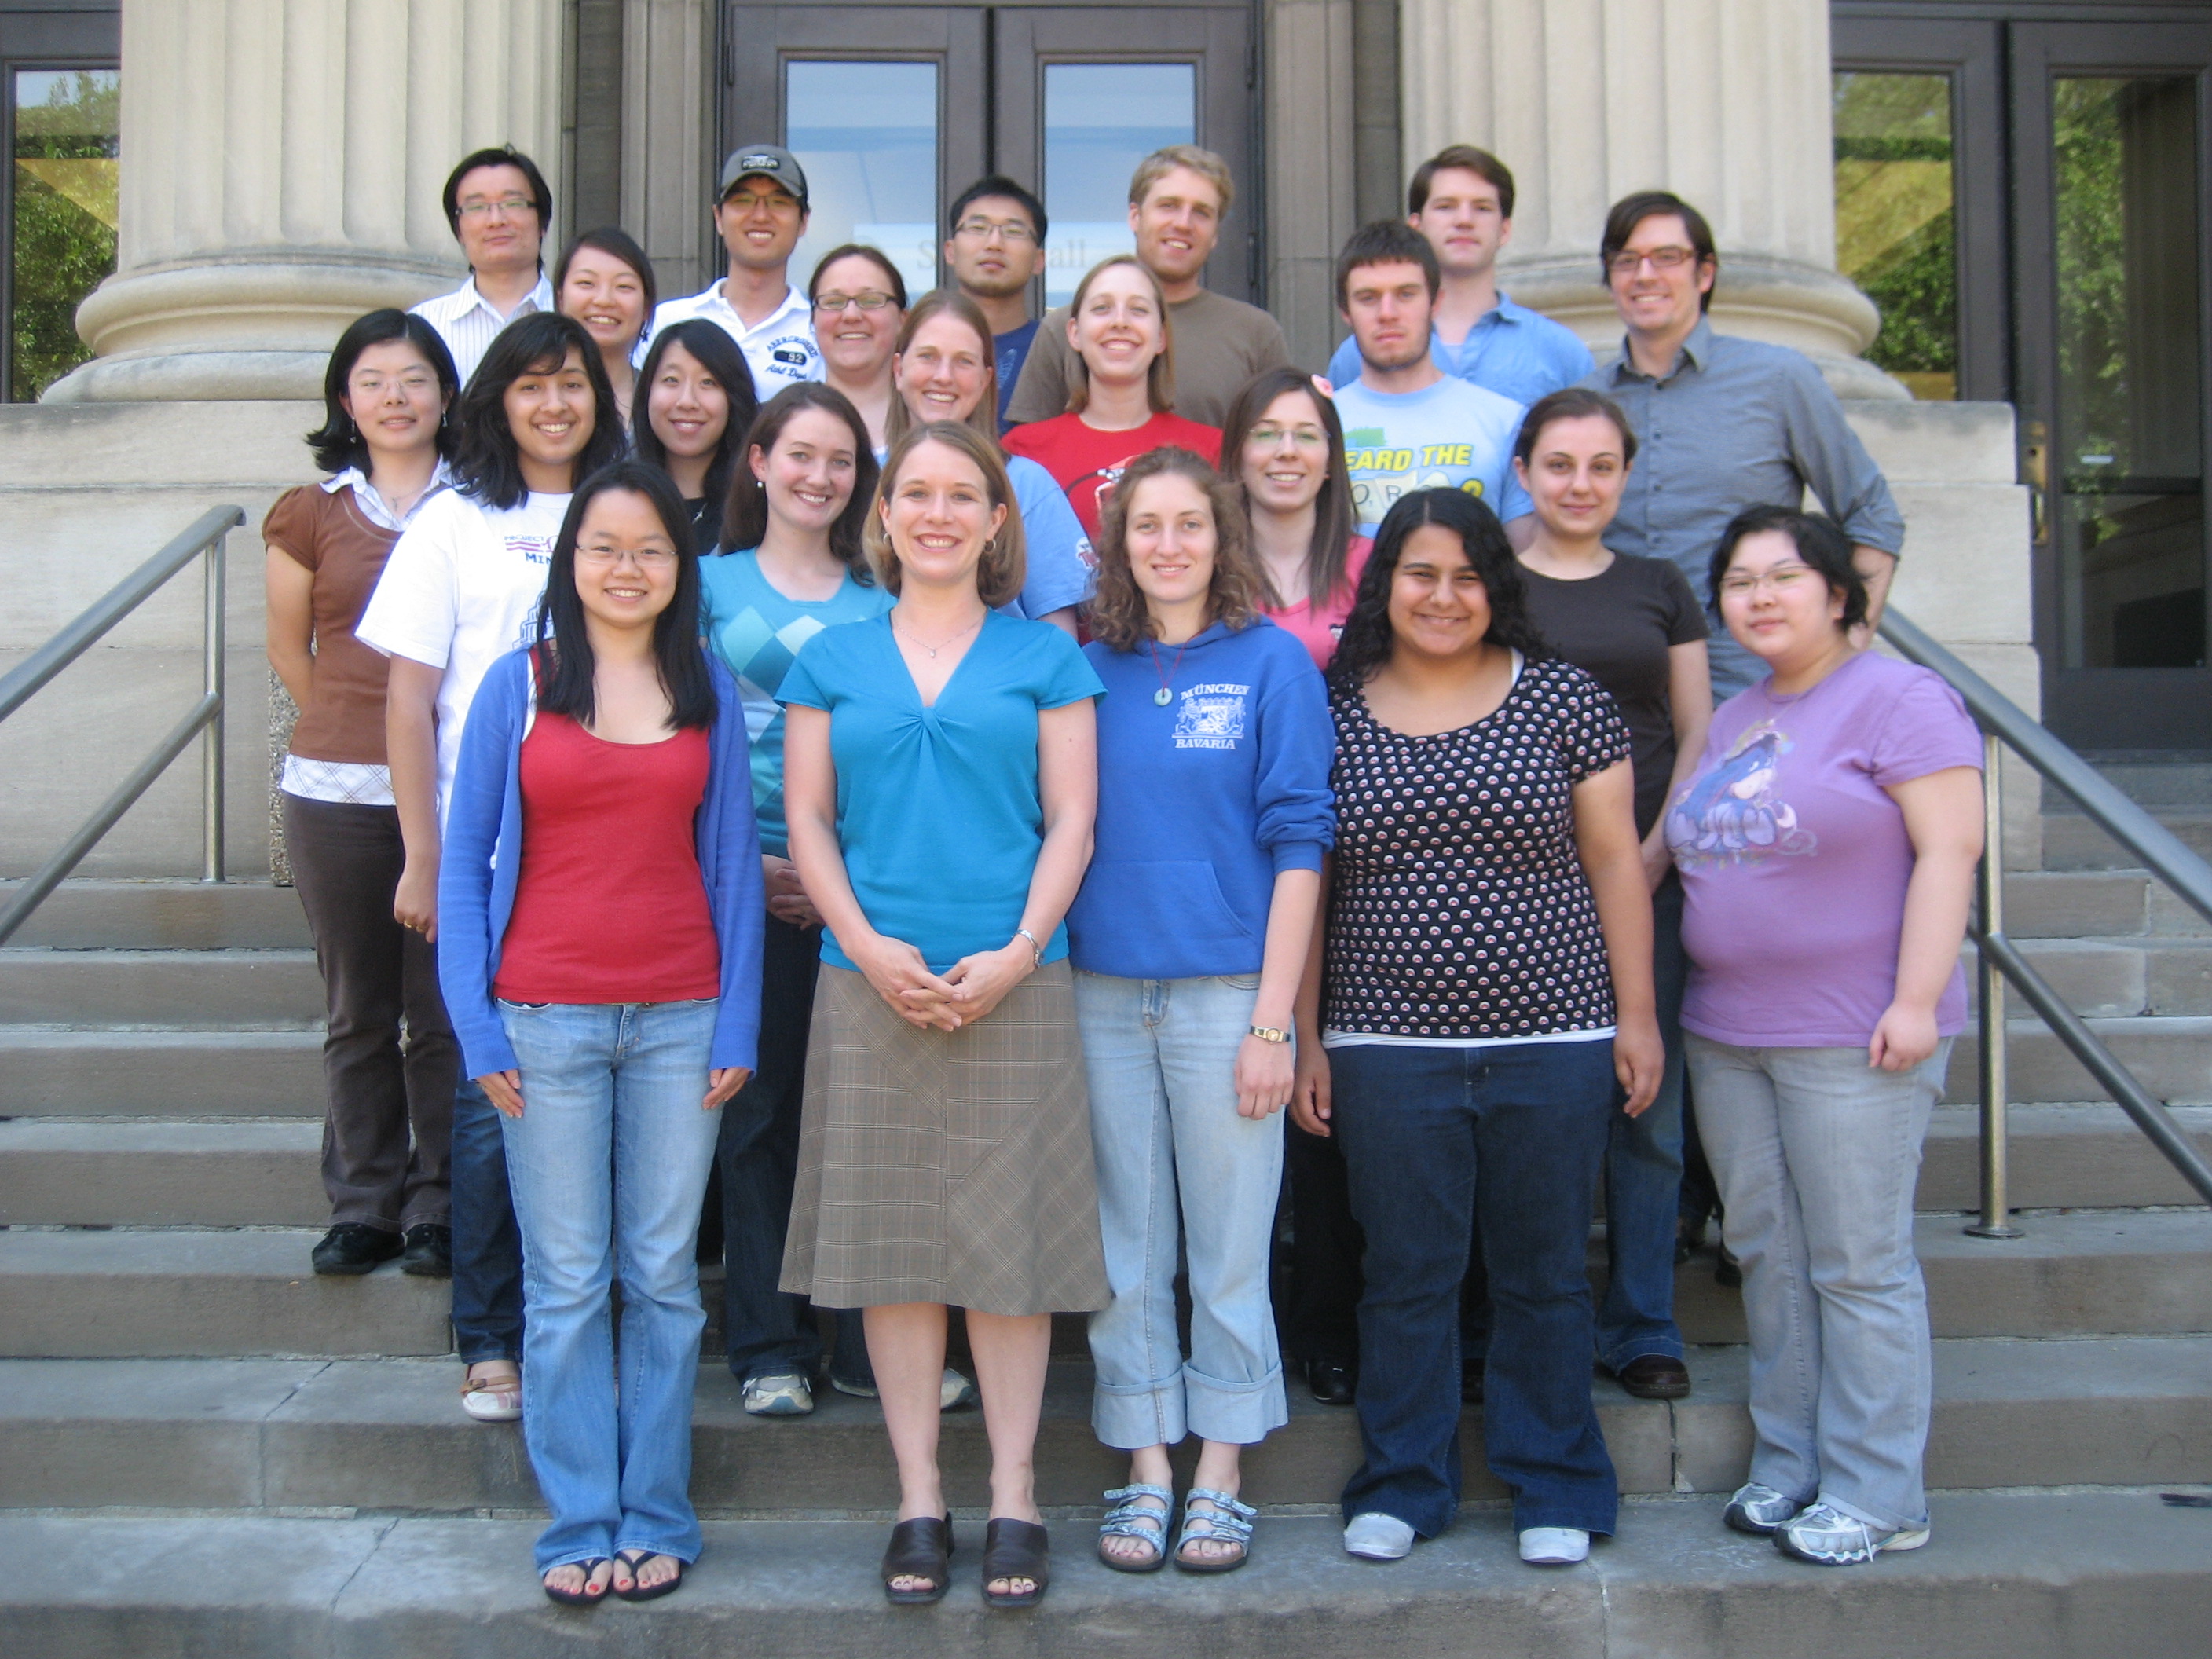 Group photo, June 2010